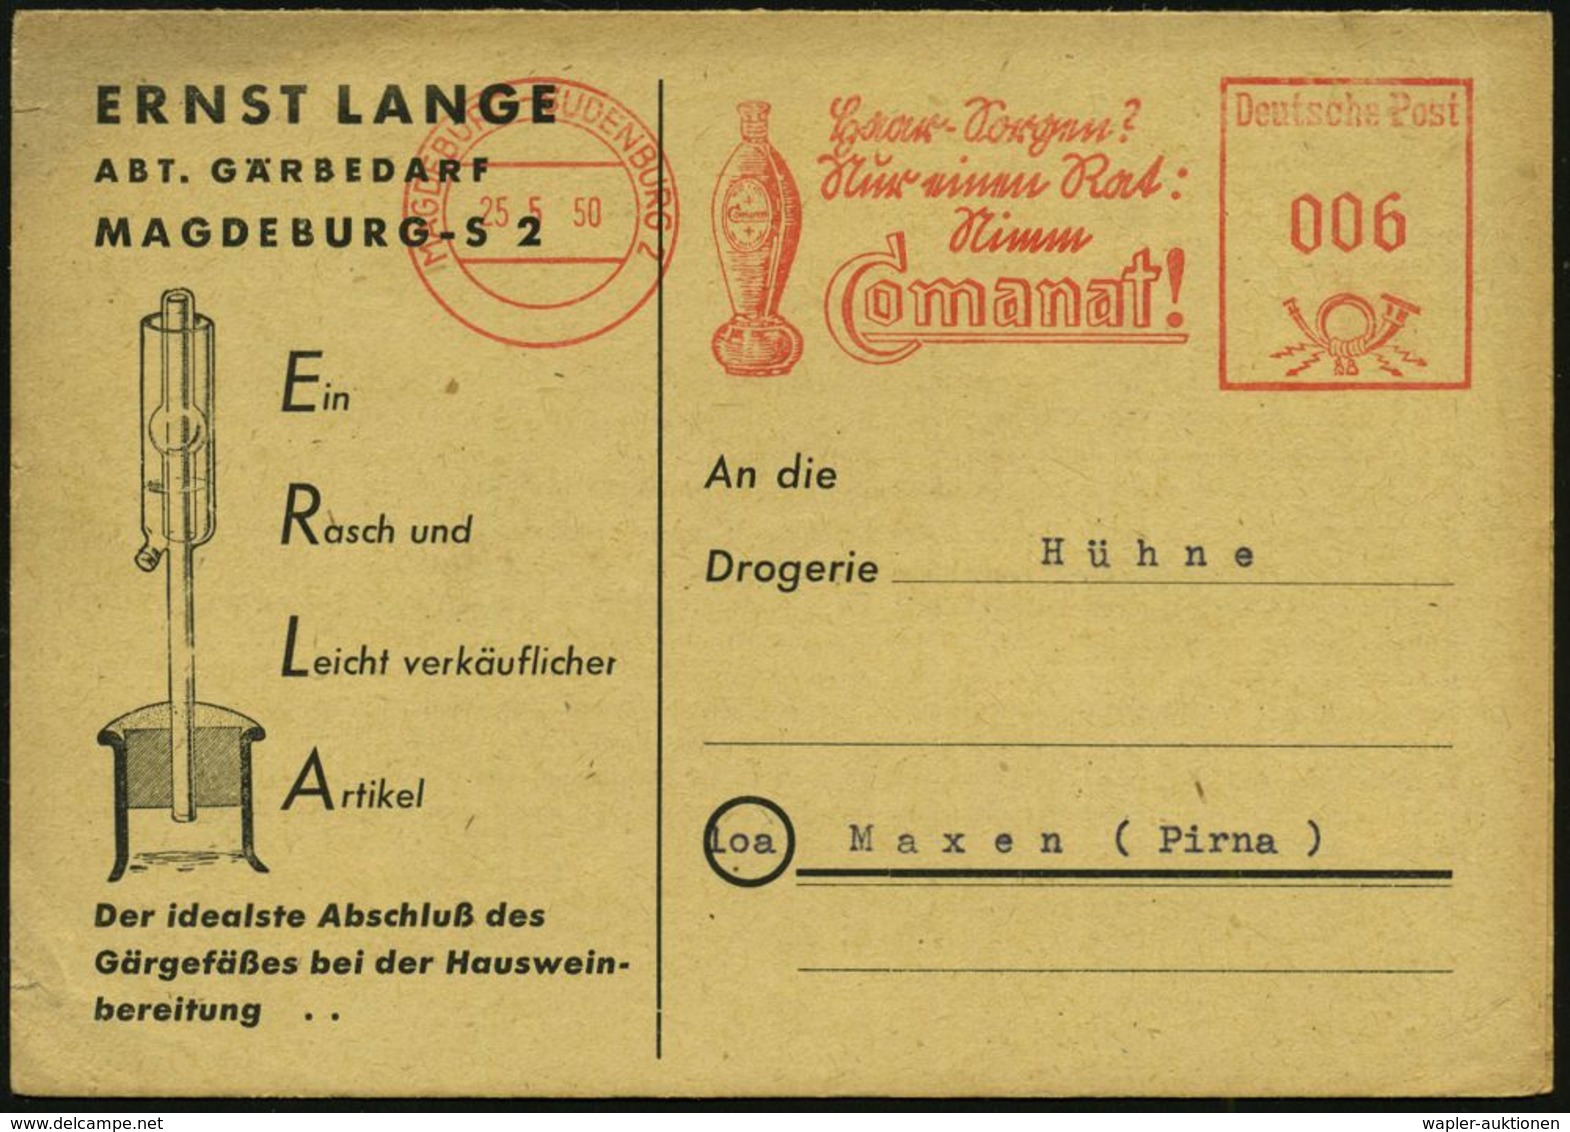 HAAR / BART / RASUR / FRISEUR : MAGDEBURG-SUDENBURG 2/ Haar-Sorgen?/ Nur Einen Rat./ Nimm/ Comanat! 1950 (25.5.) AFS, Te - Pharmacie